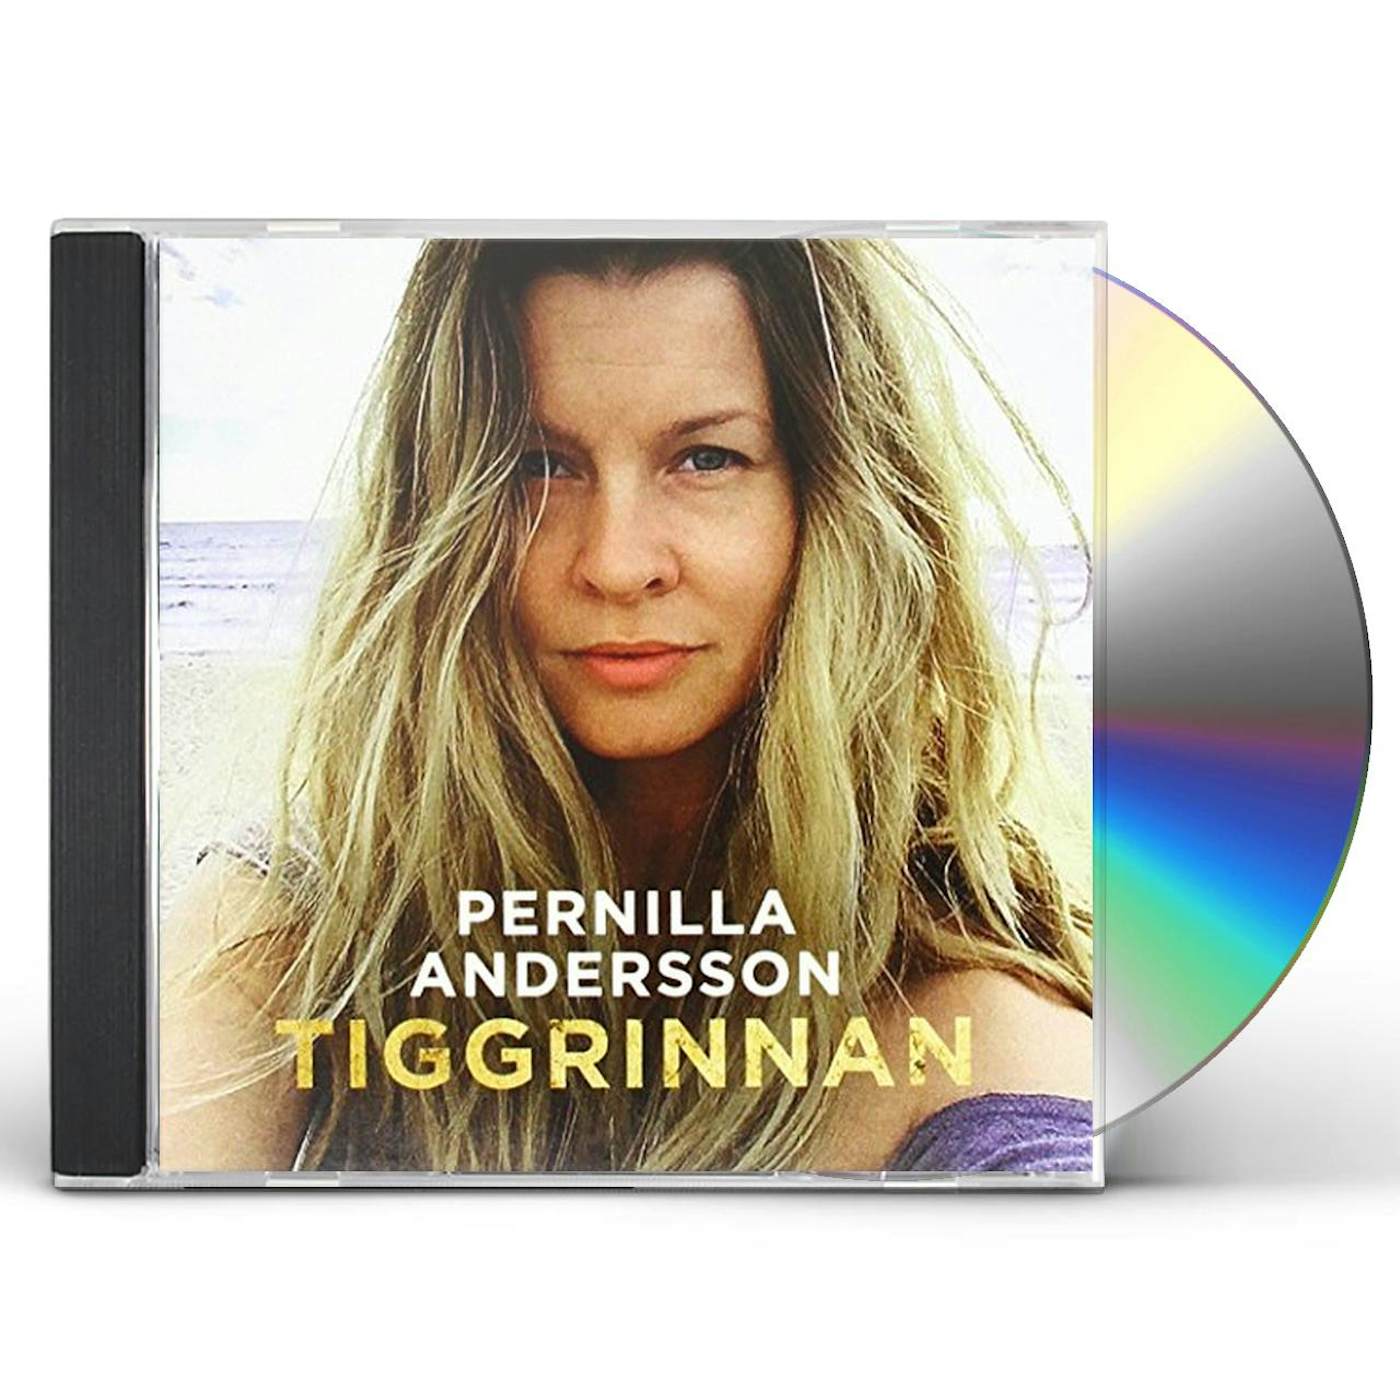 Pernilla Andersson TIGGRINNAN CD